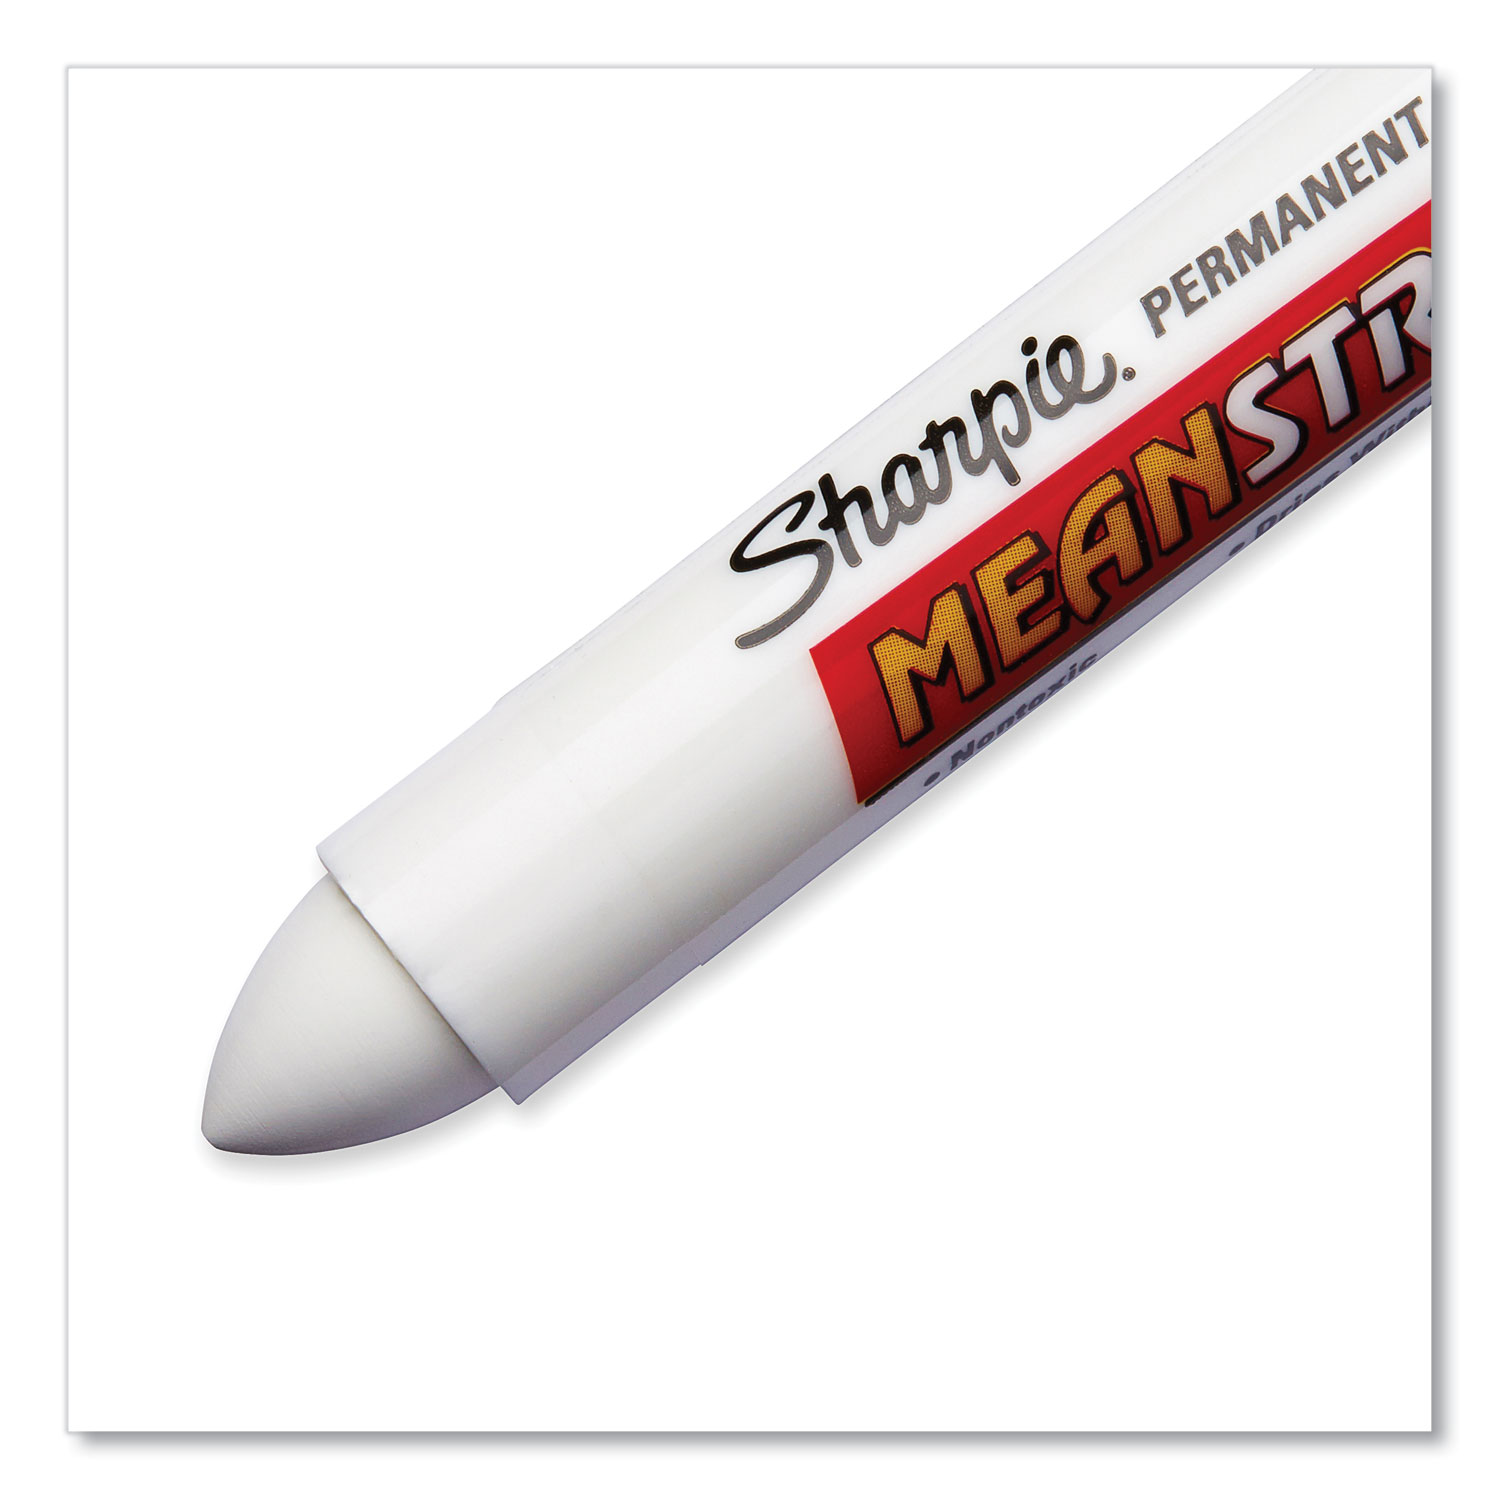 Permanent Paint Marker by Sharpie® SAN35558